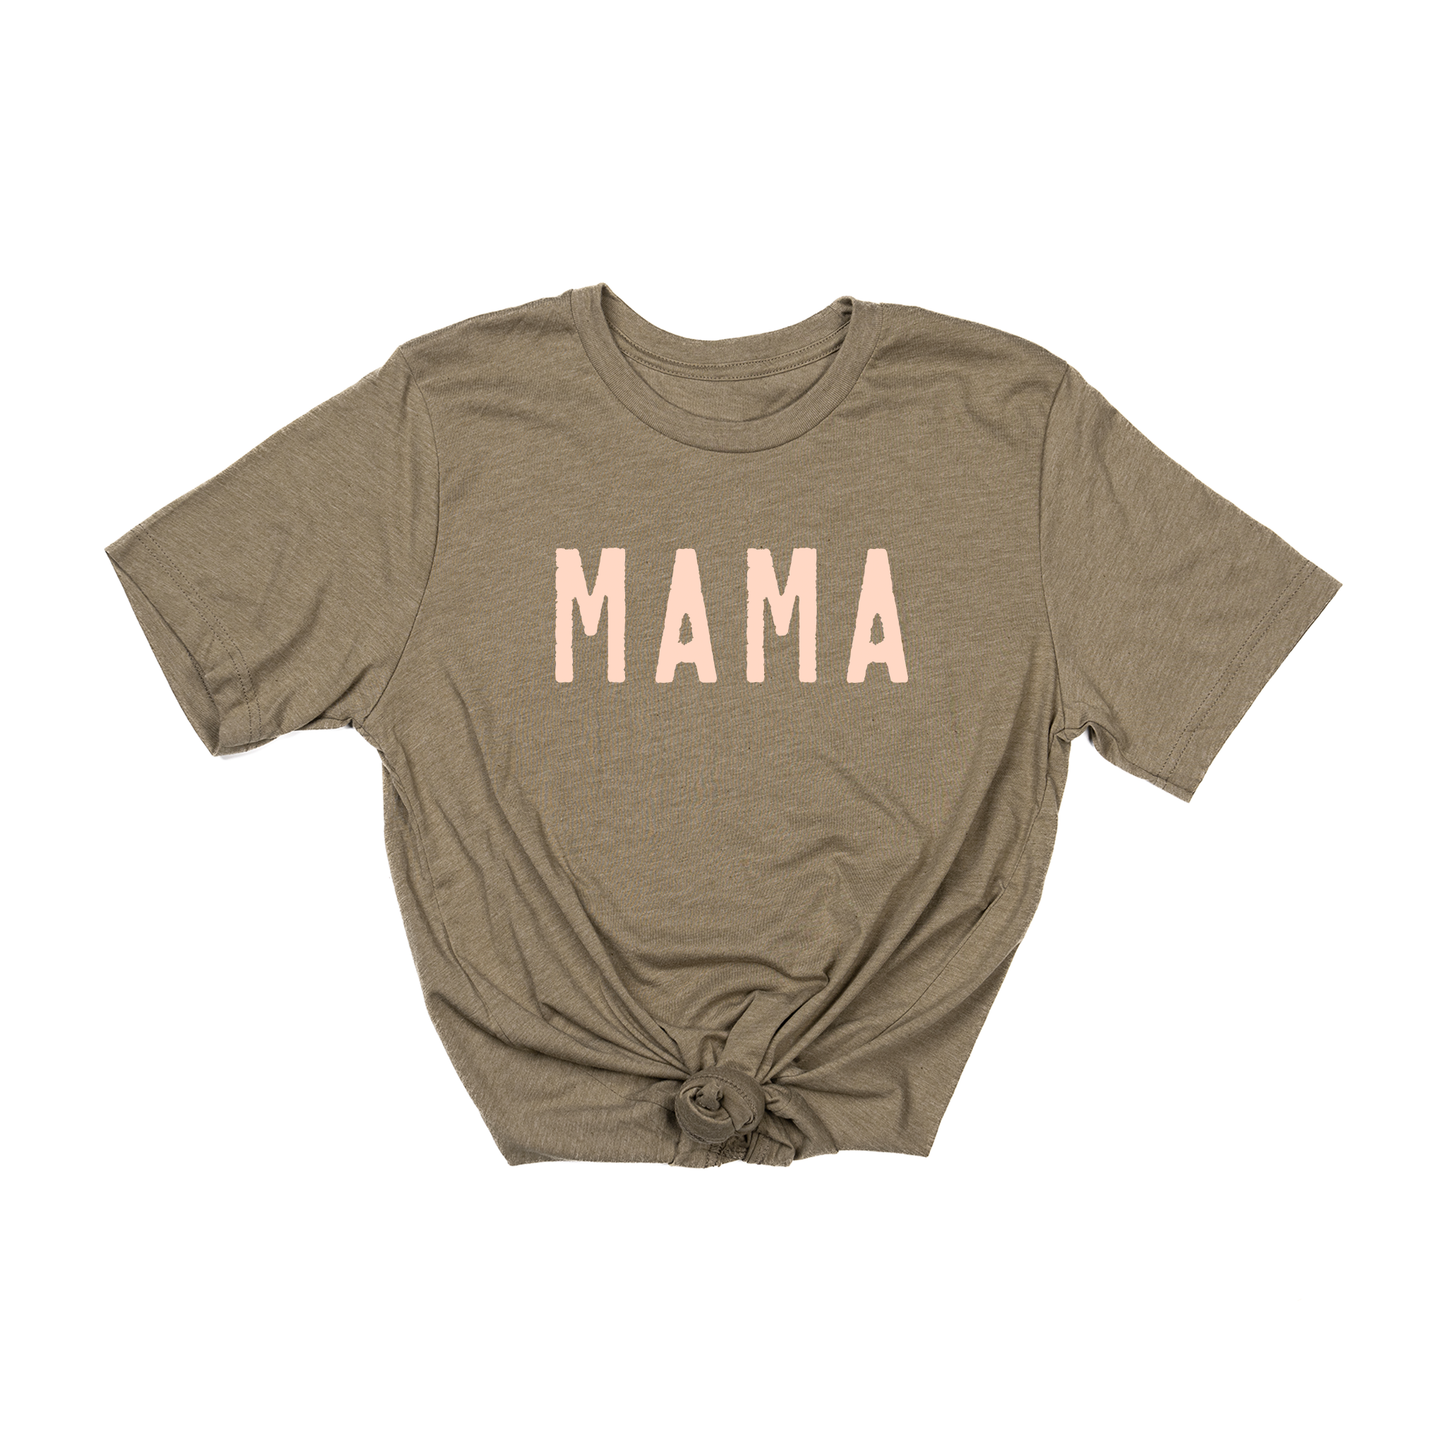 Mama (Rough,  Peach) - Tee (Olive)